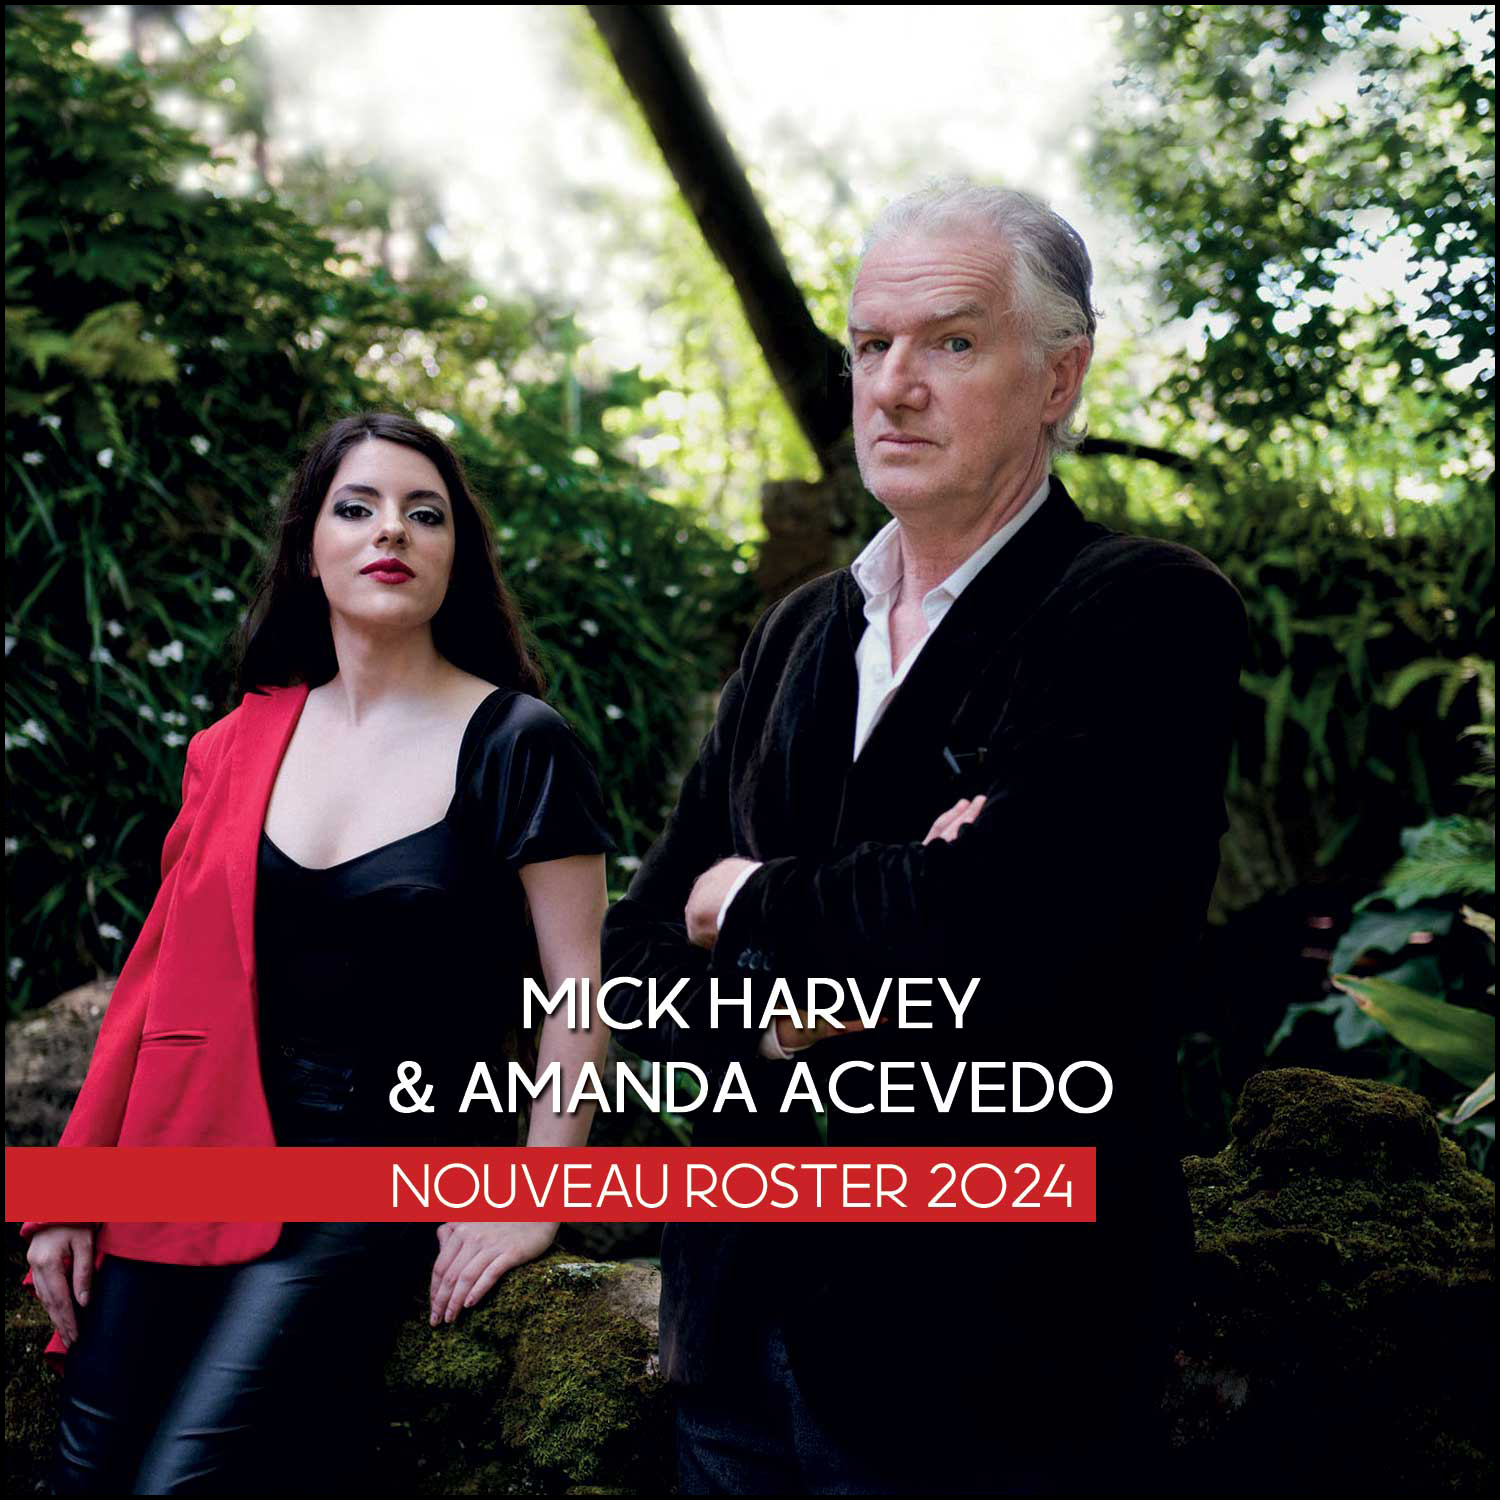 Mick Harvey & Amanda Acevedo